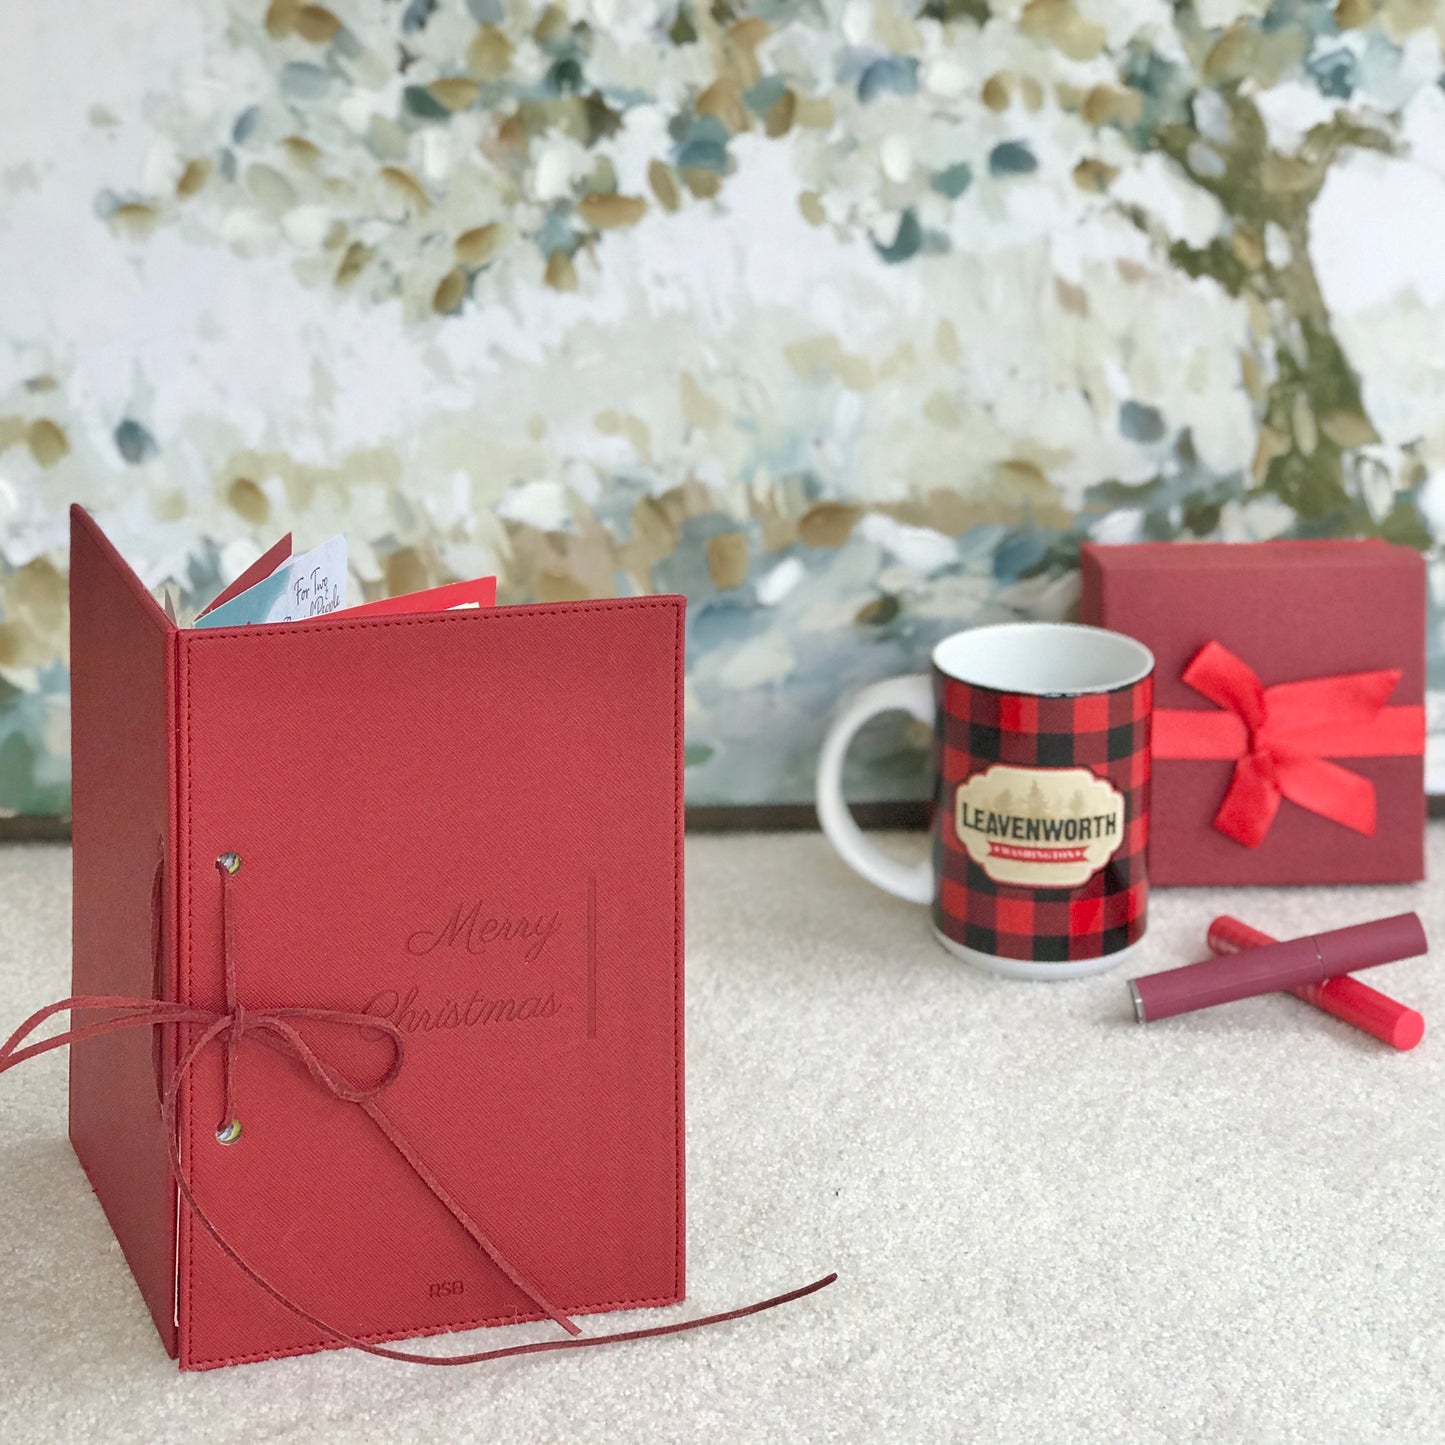 "Merry Christmas" Card Keeper Kit